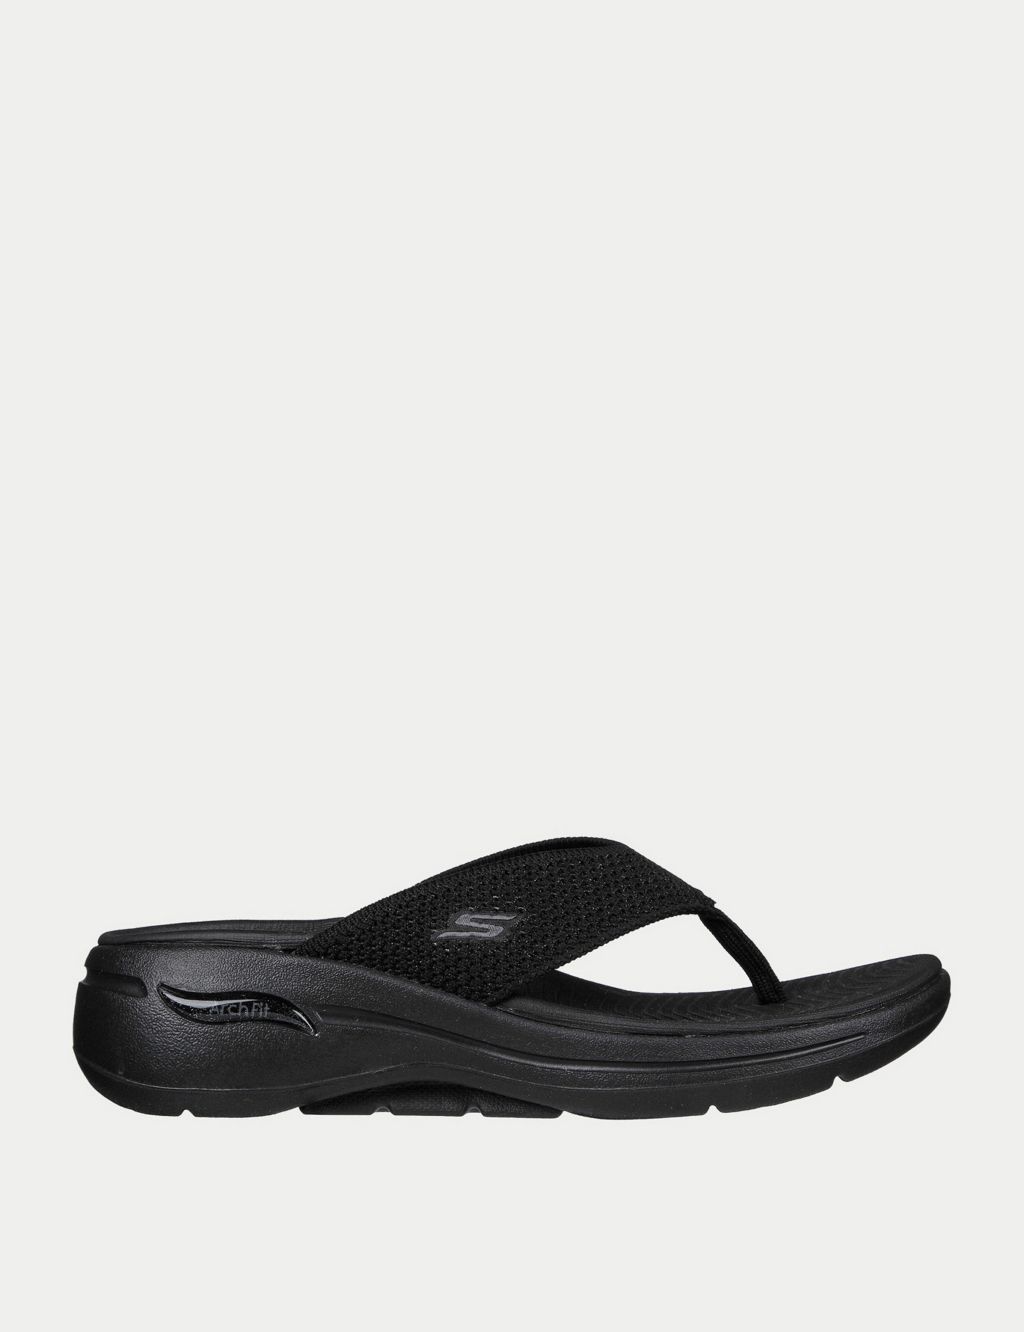 GOwalk Fit Sandal Luminous Flip Flops | Skechers |